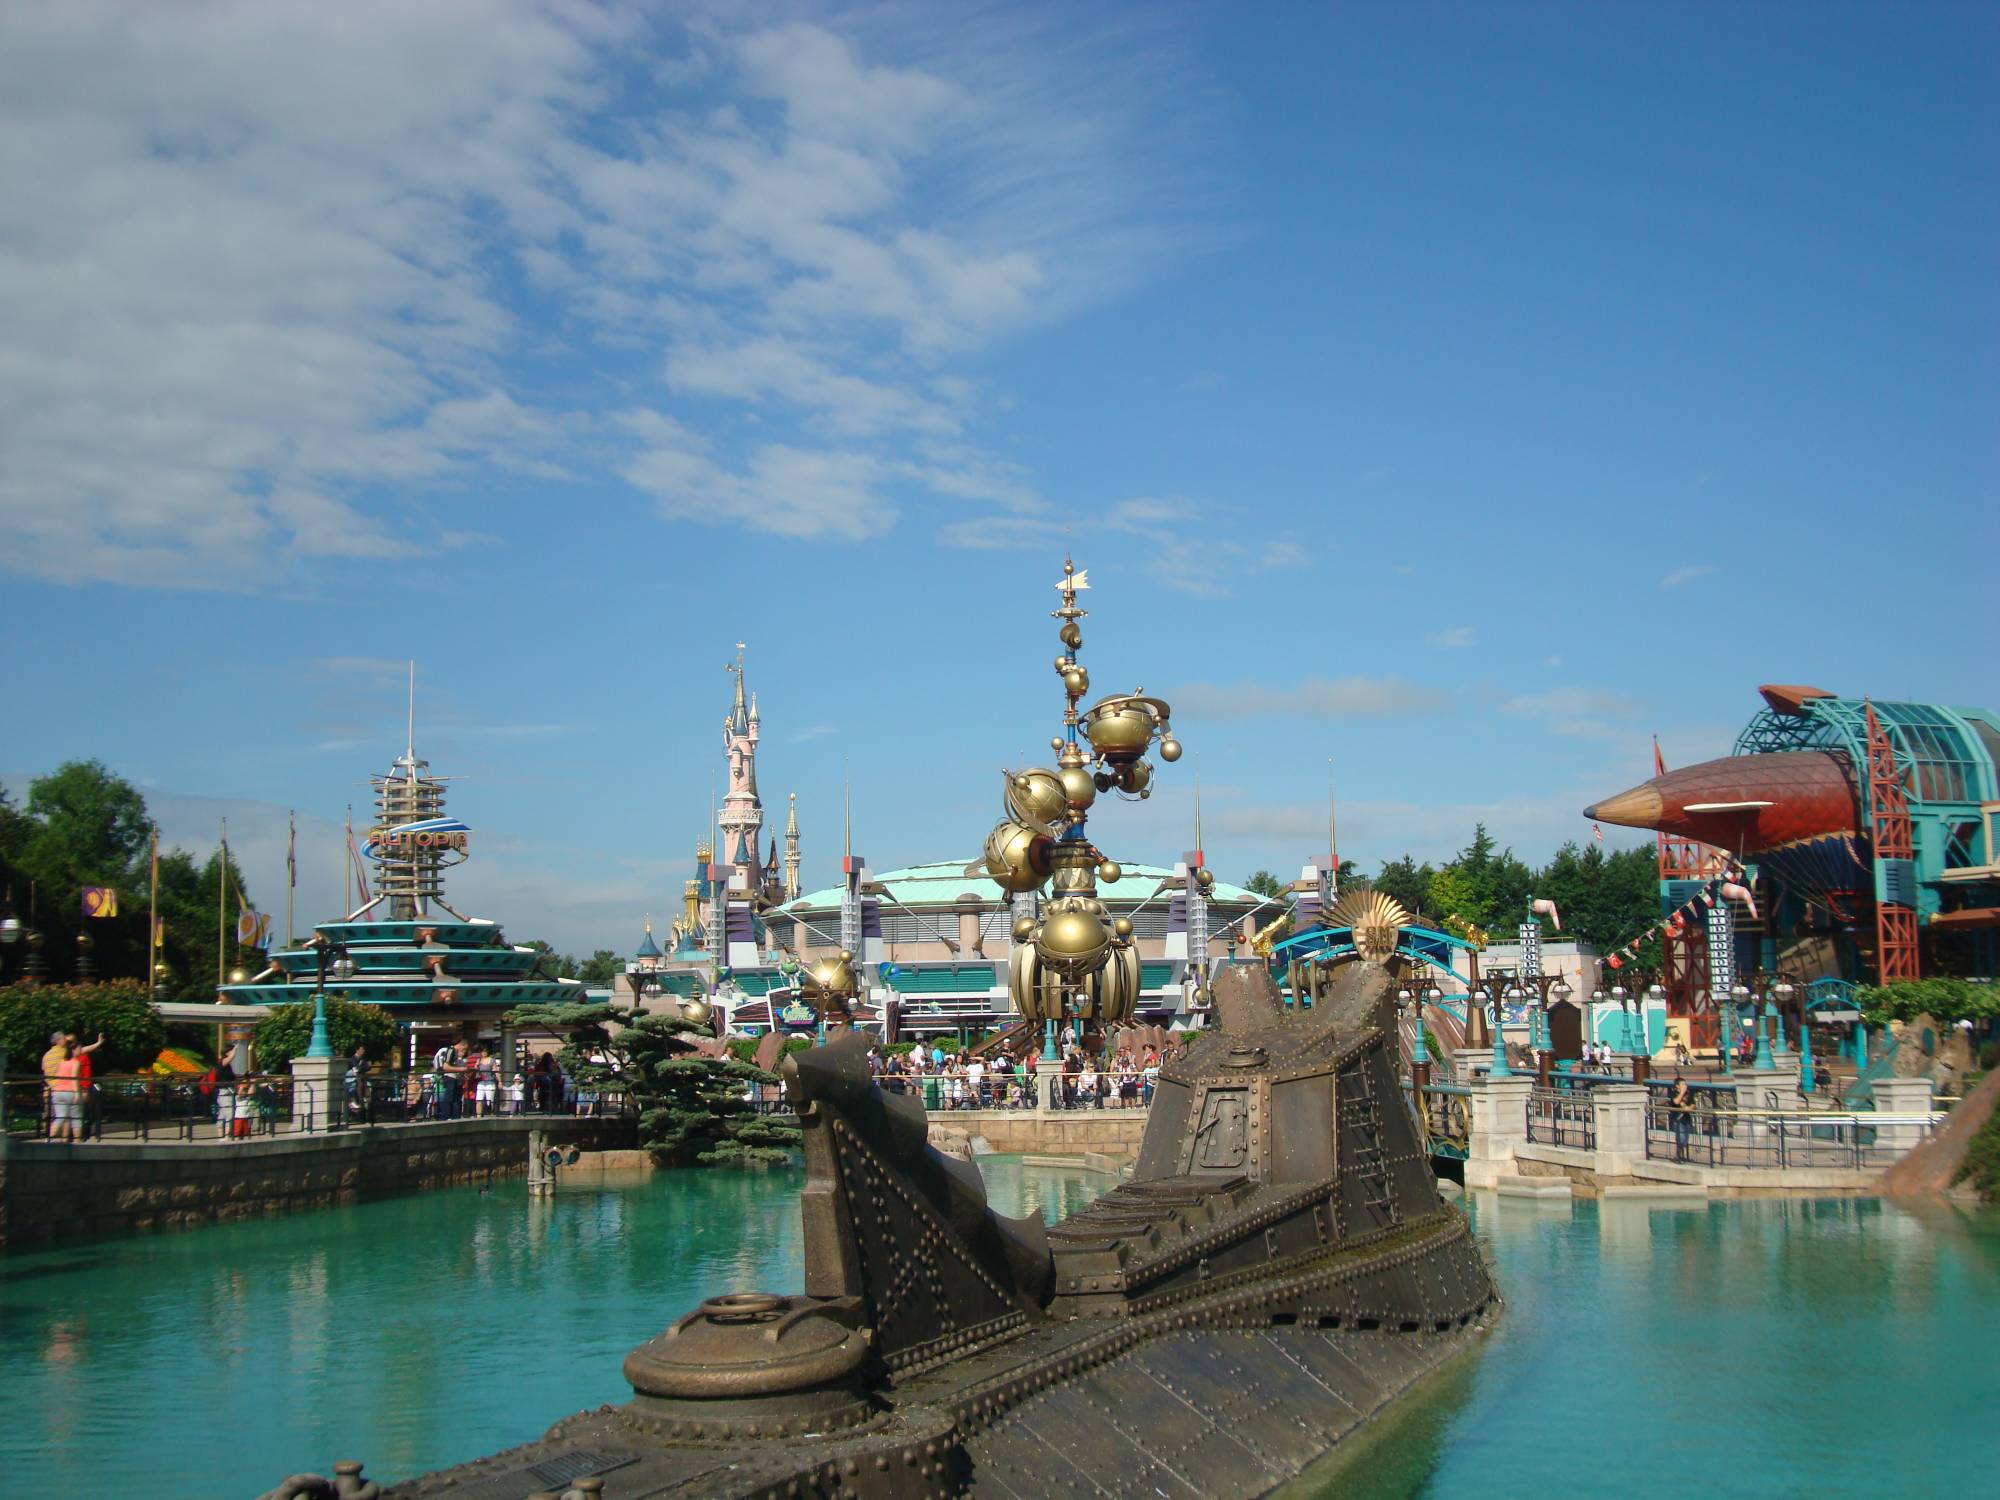 Disneyland Paris - Discoveryland